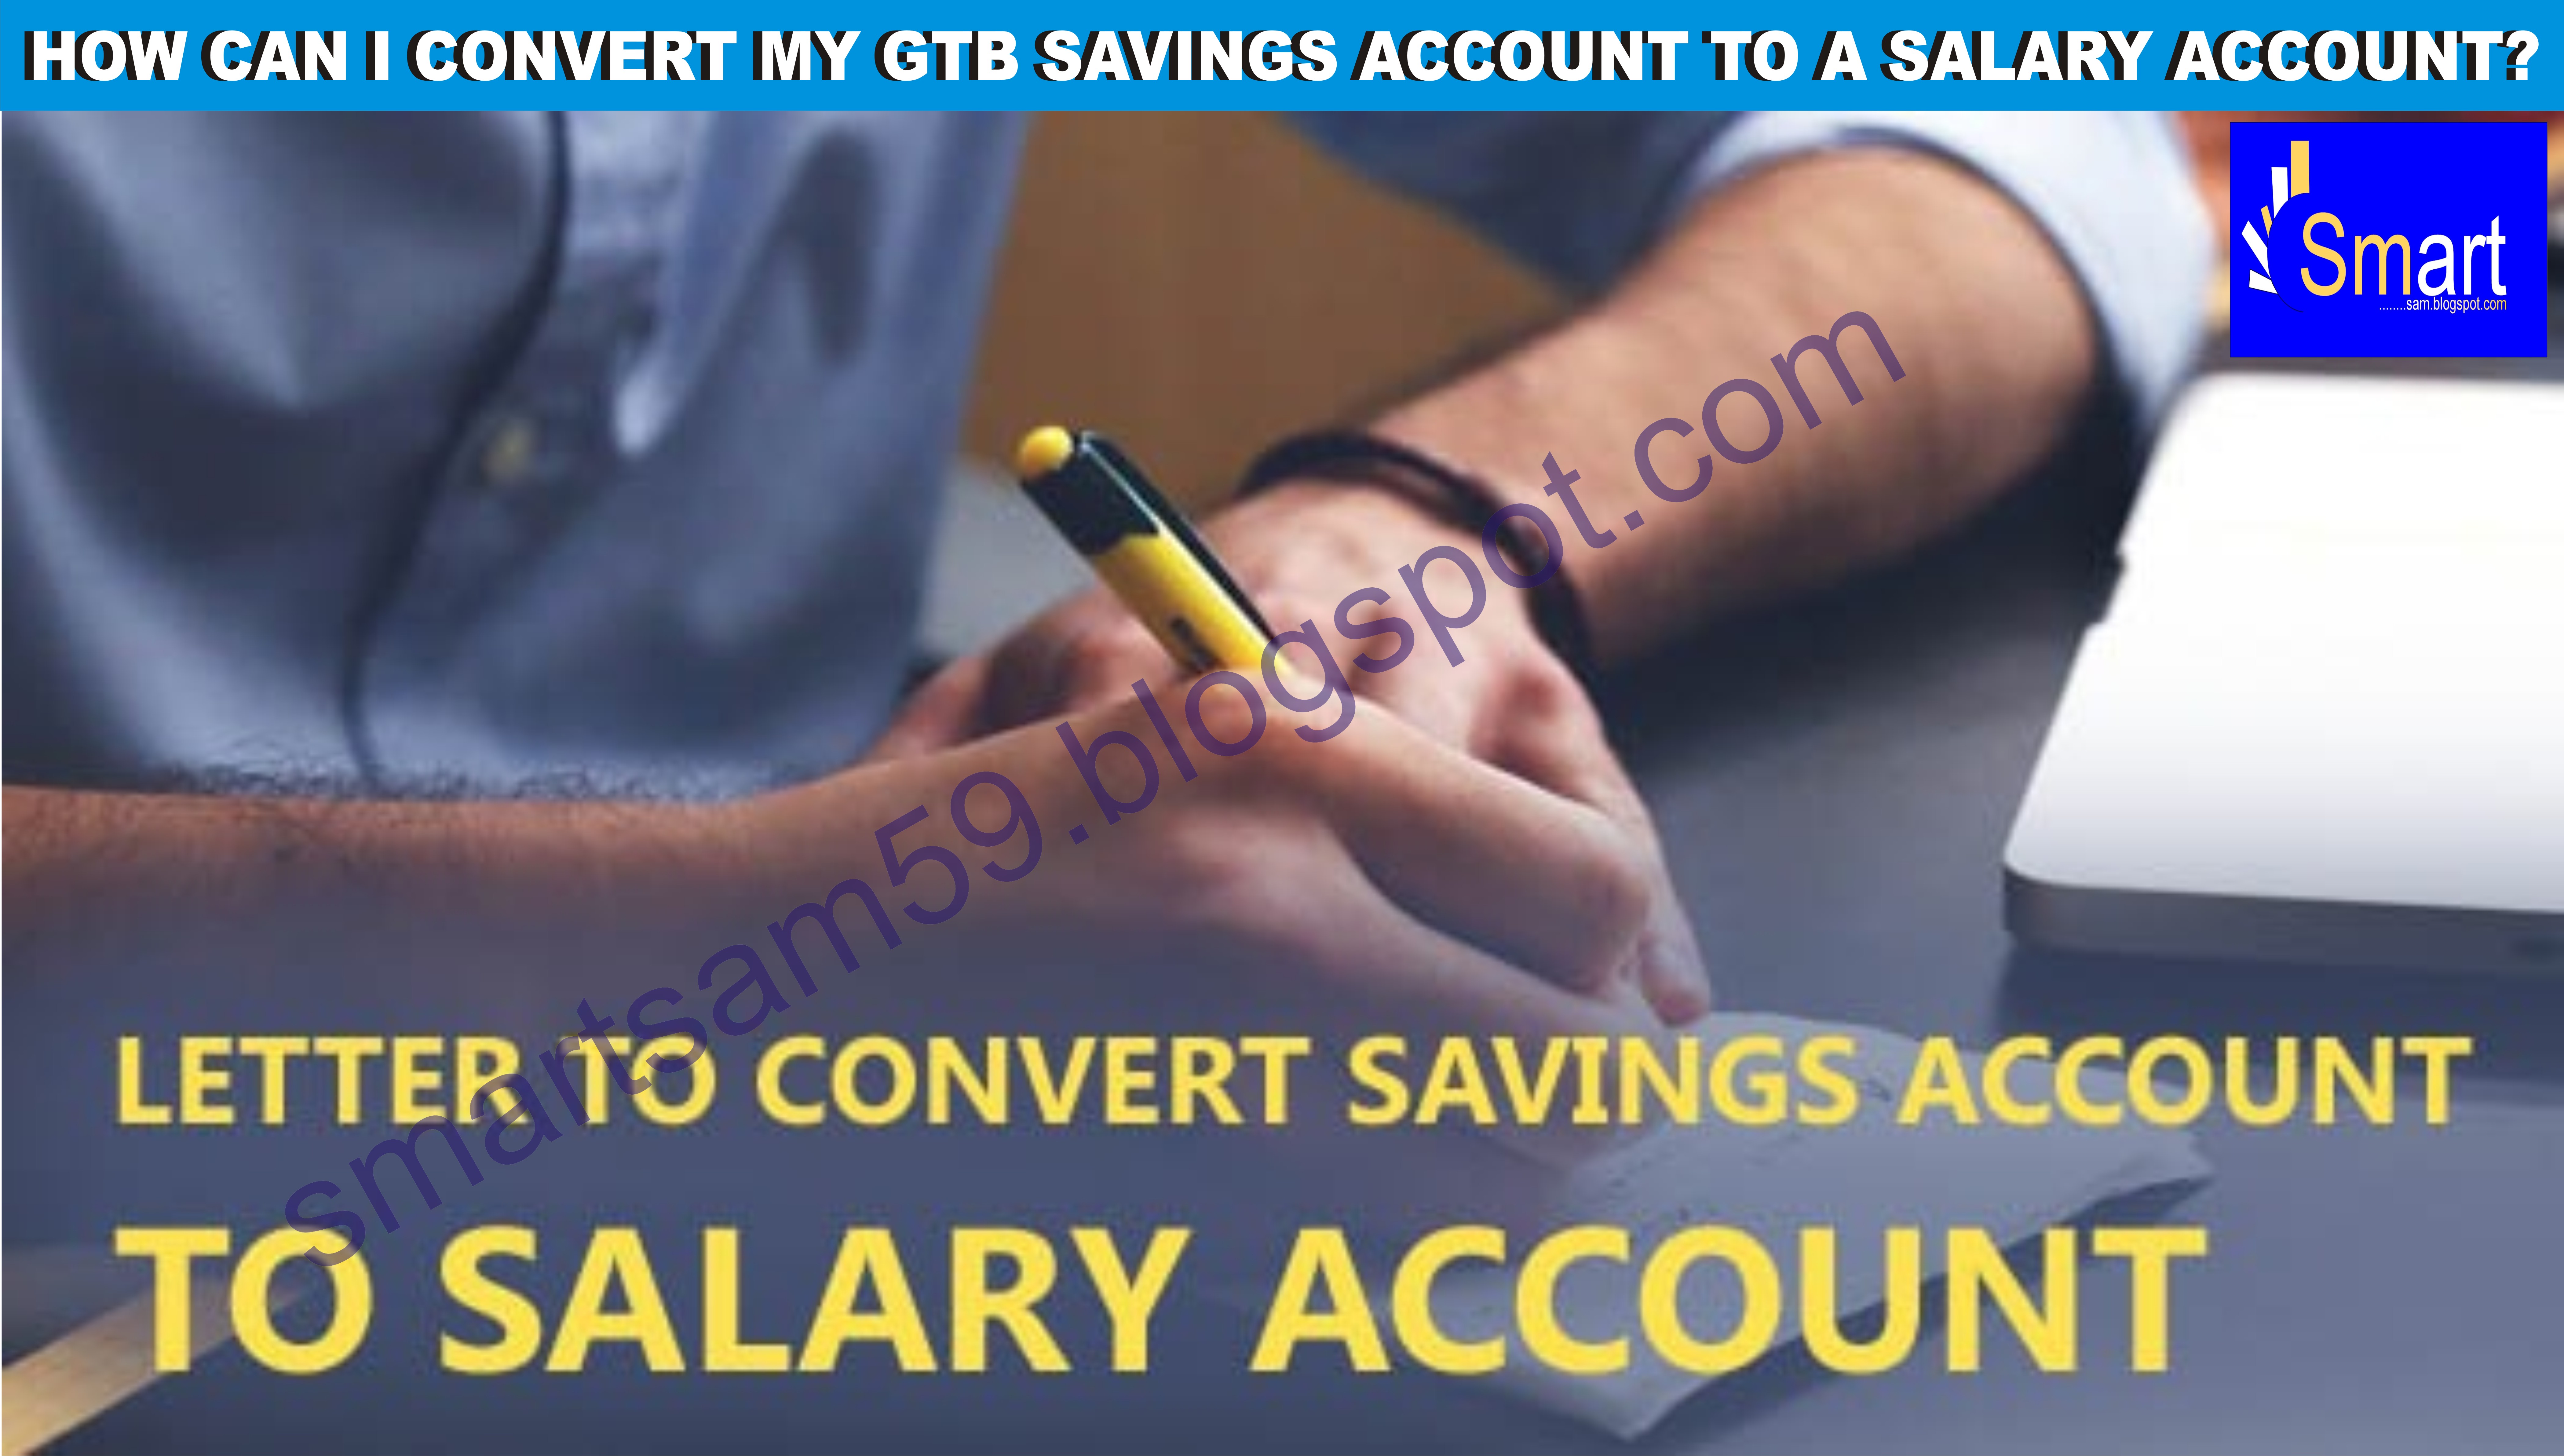 How can I convert my GTB savings account to a salary account?